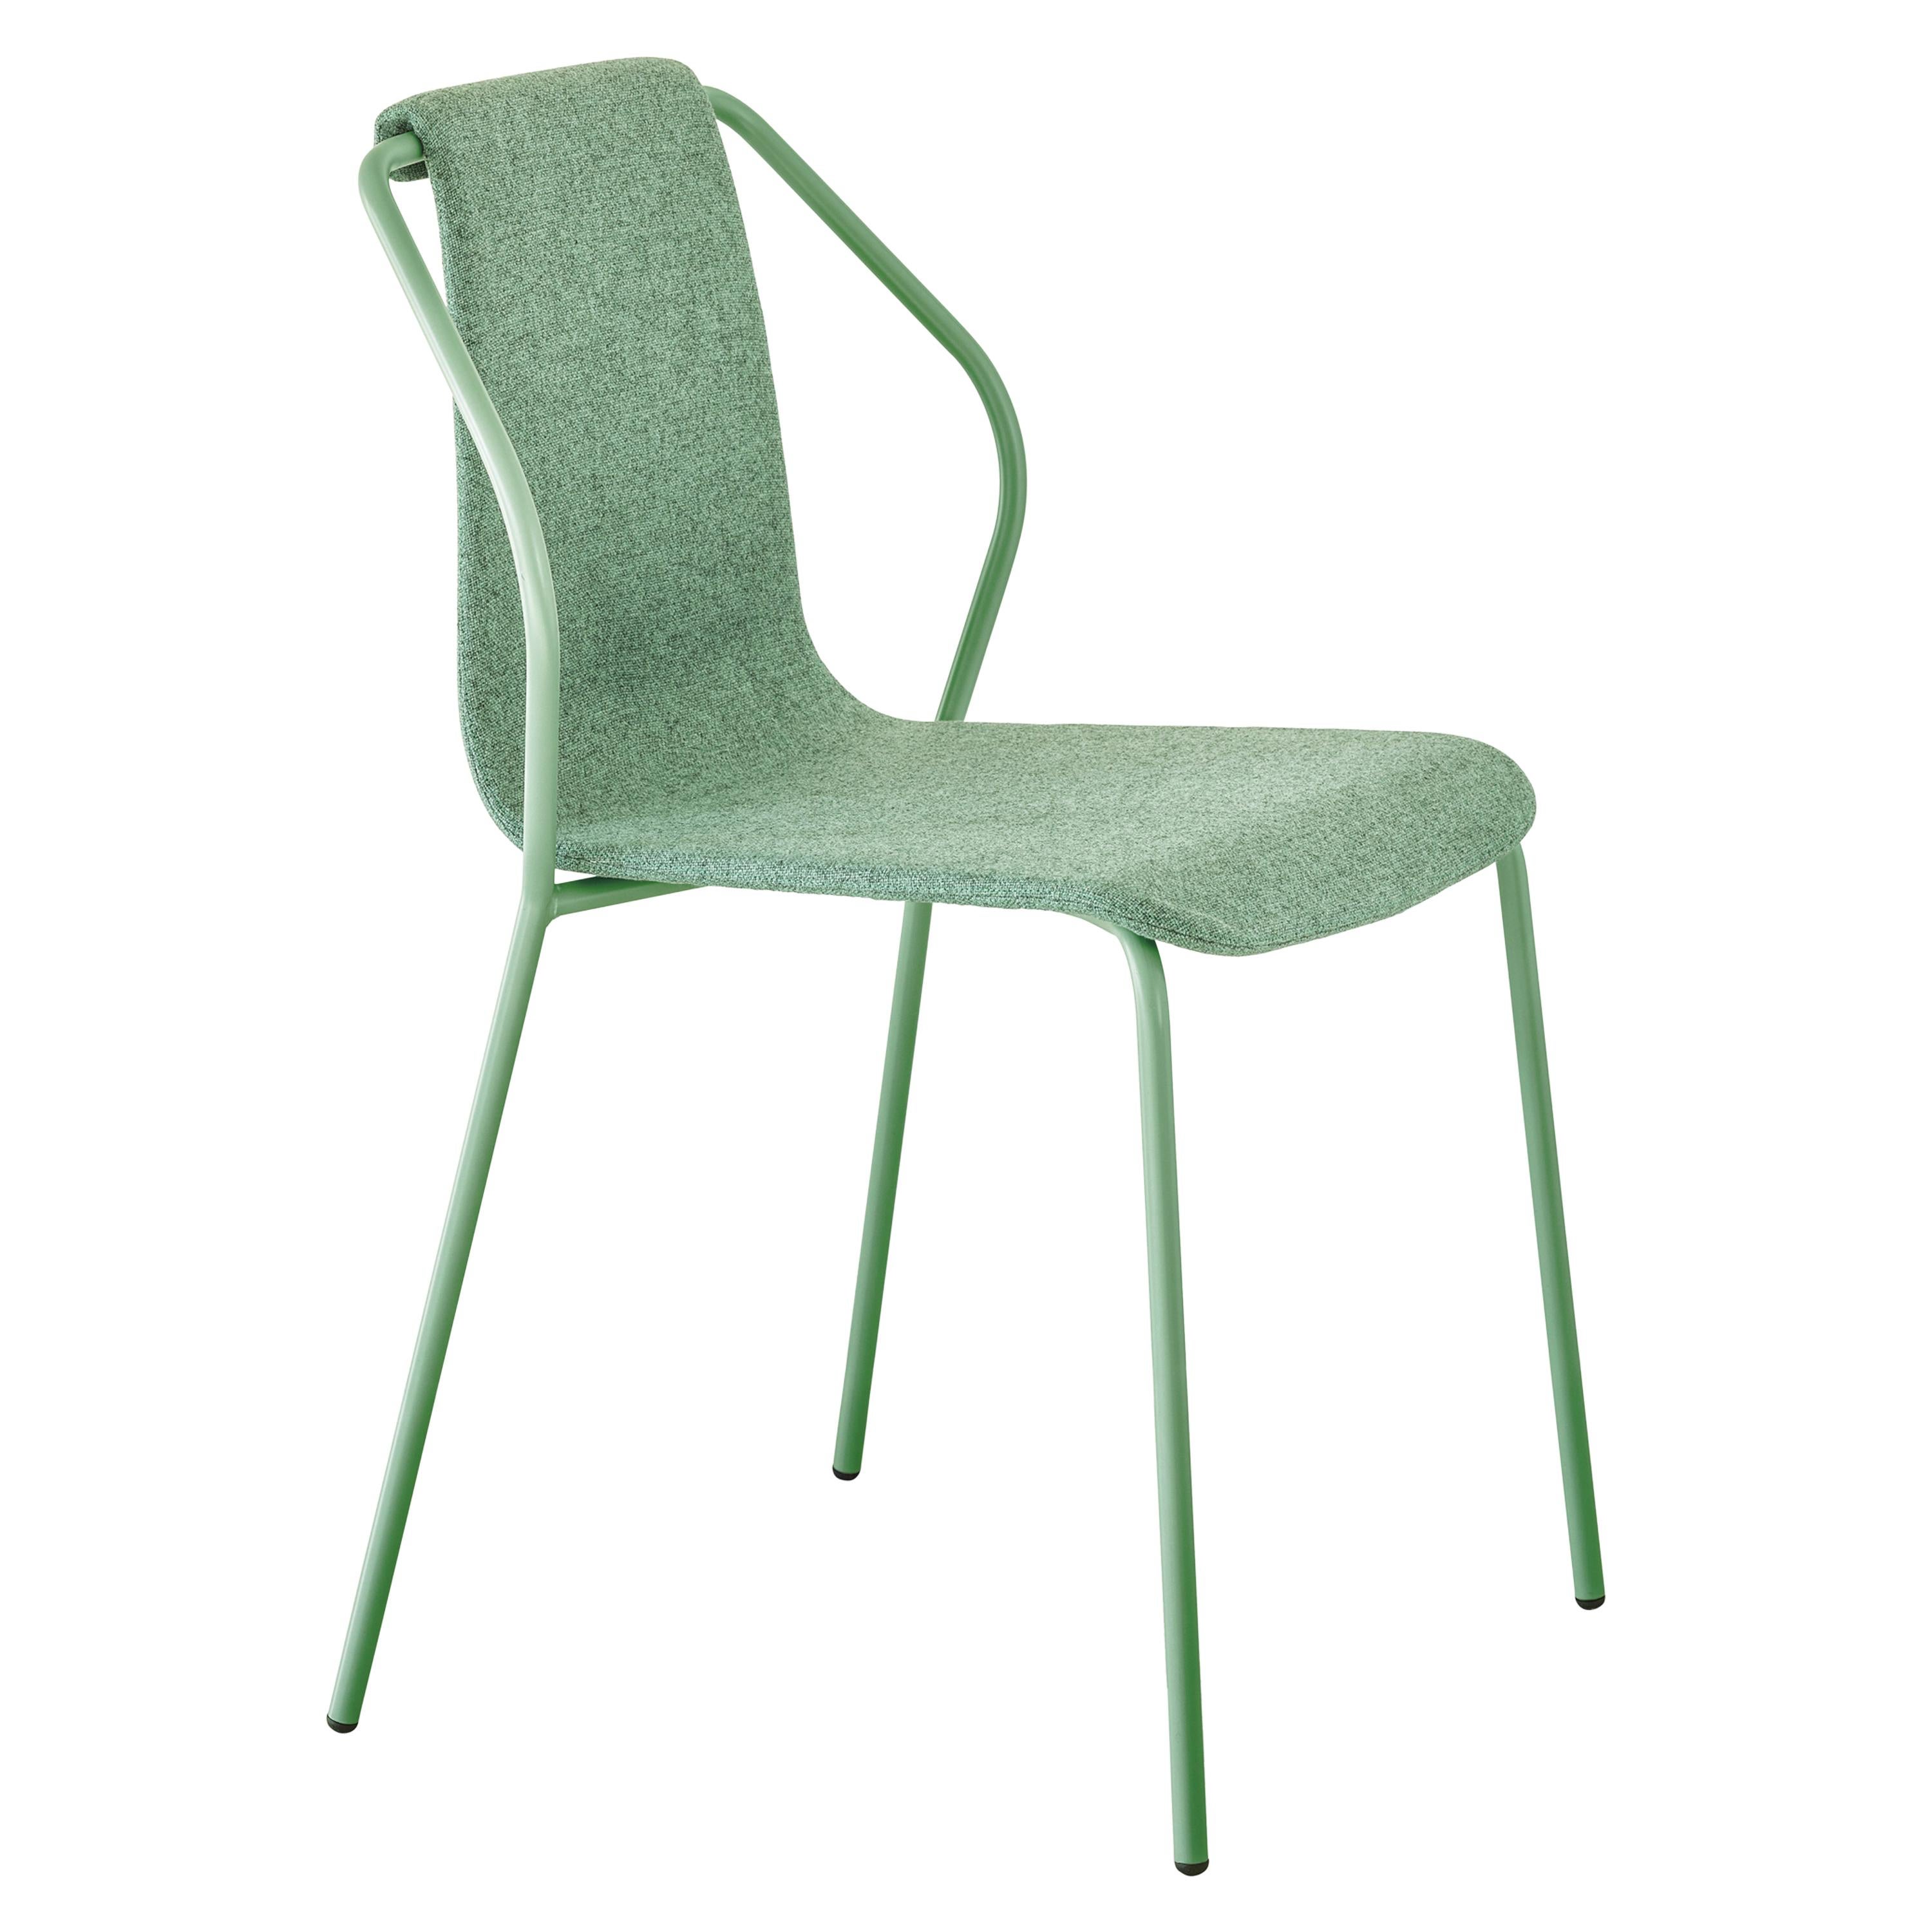 Baleri Italia Donna Indoor Chair in Green Fabric by Studio Irvine